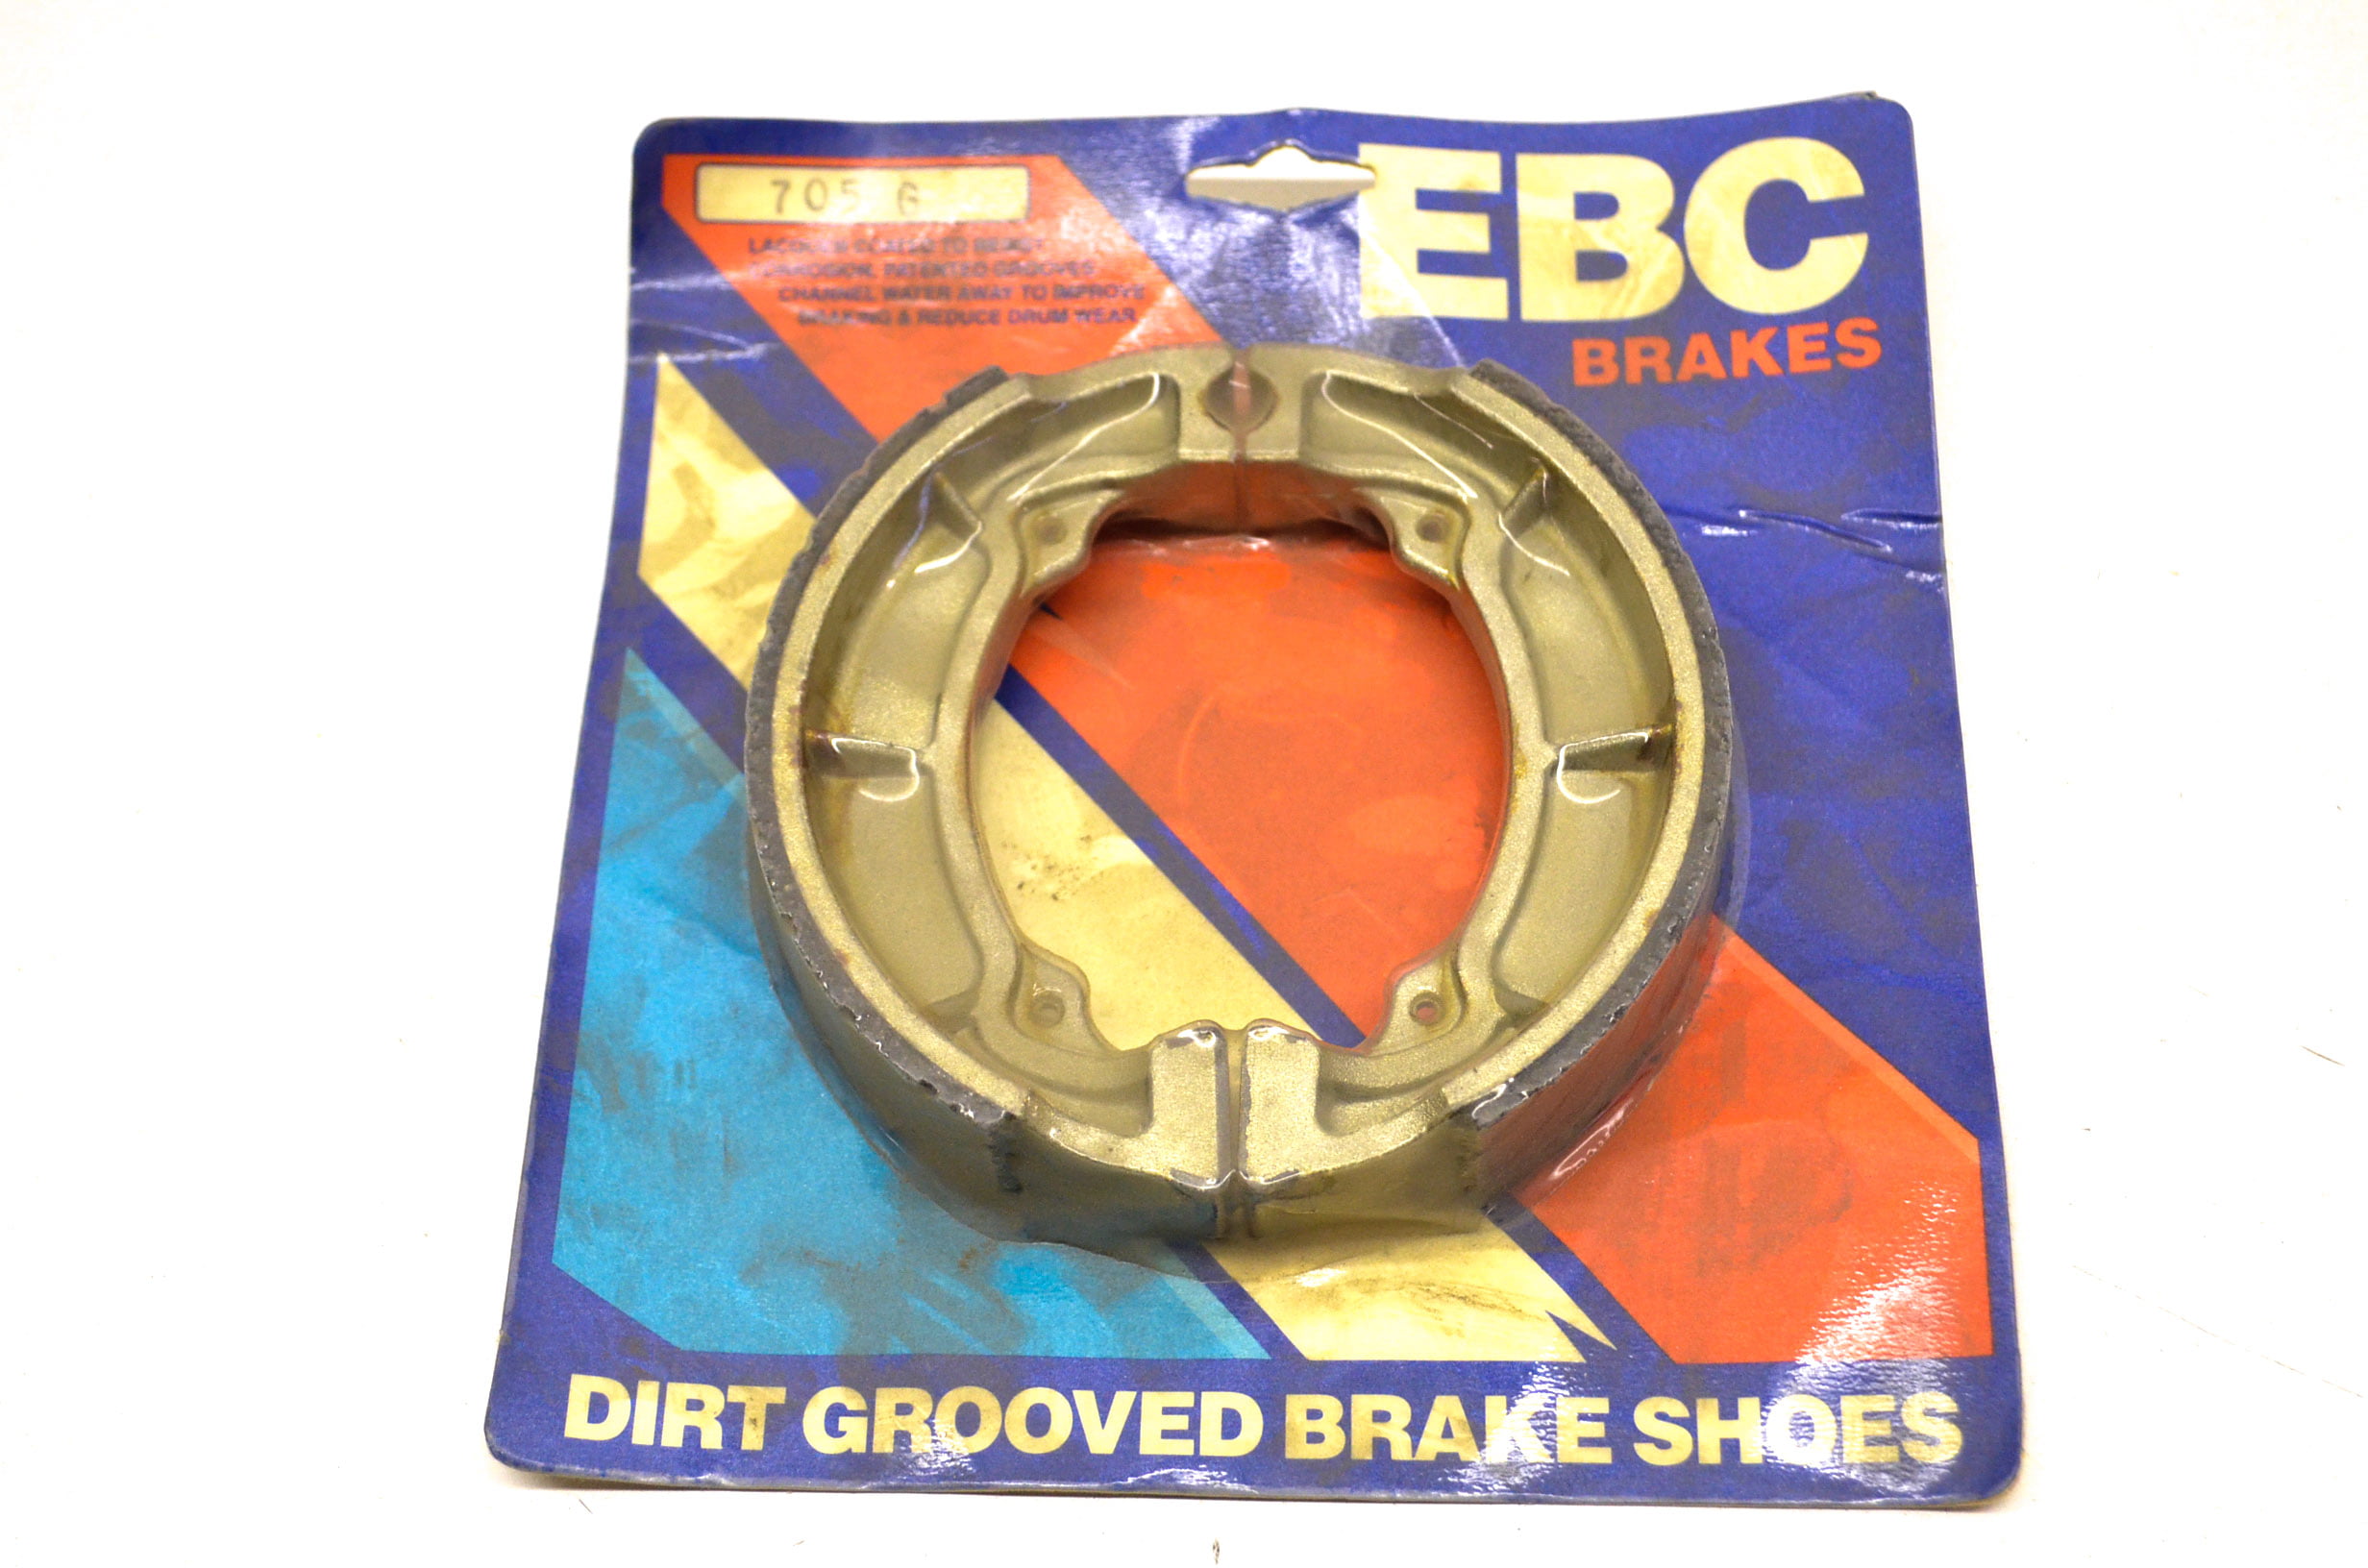 EBC Brakes 705G Water Grooved Brake Shoe